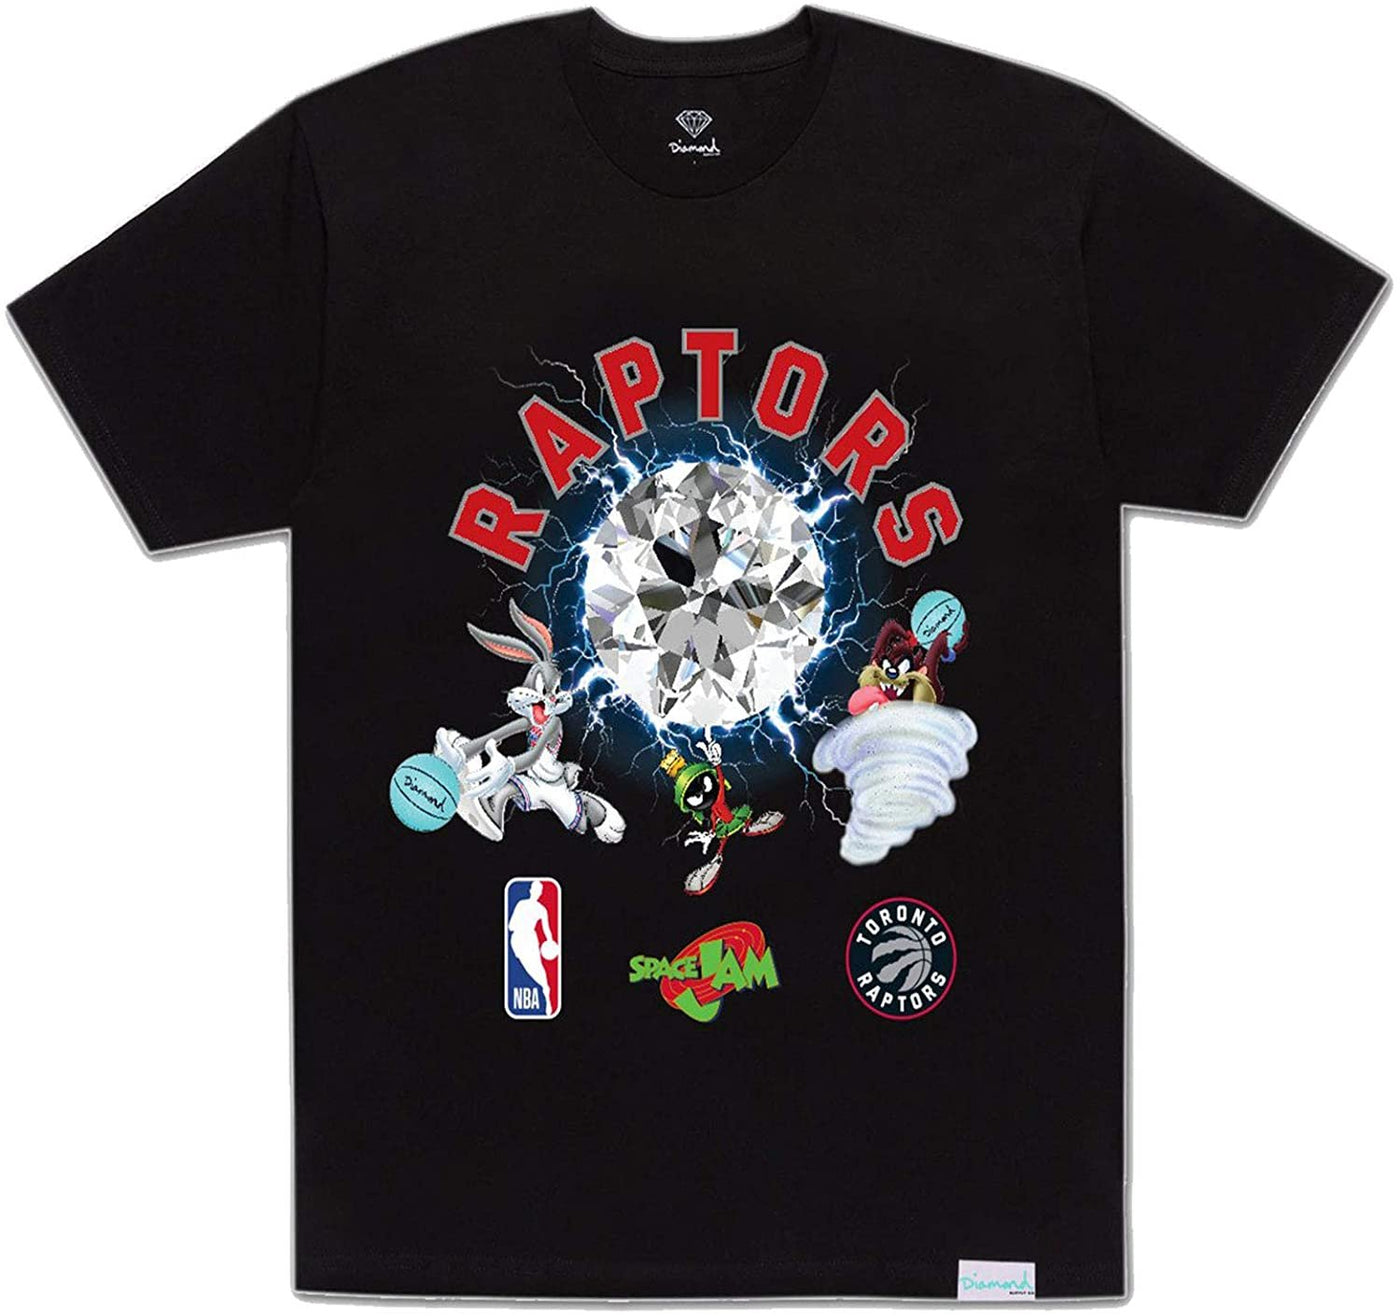 Space Jam x NBA Toronto Raptors Short Sleeve T-Shirt